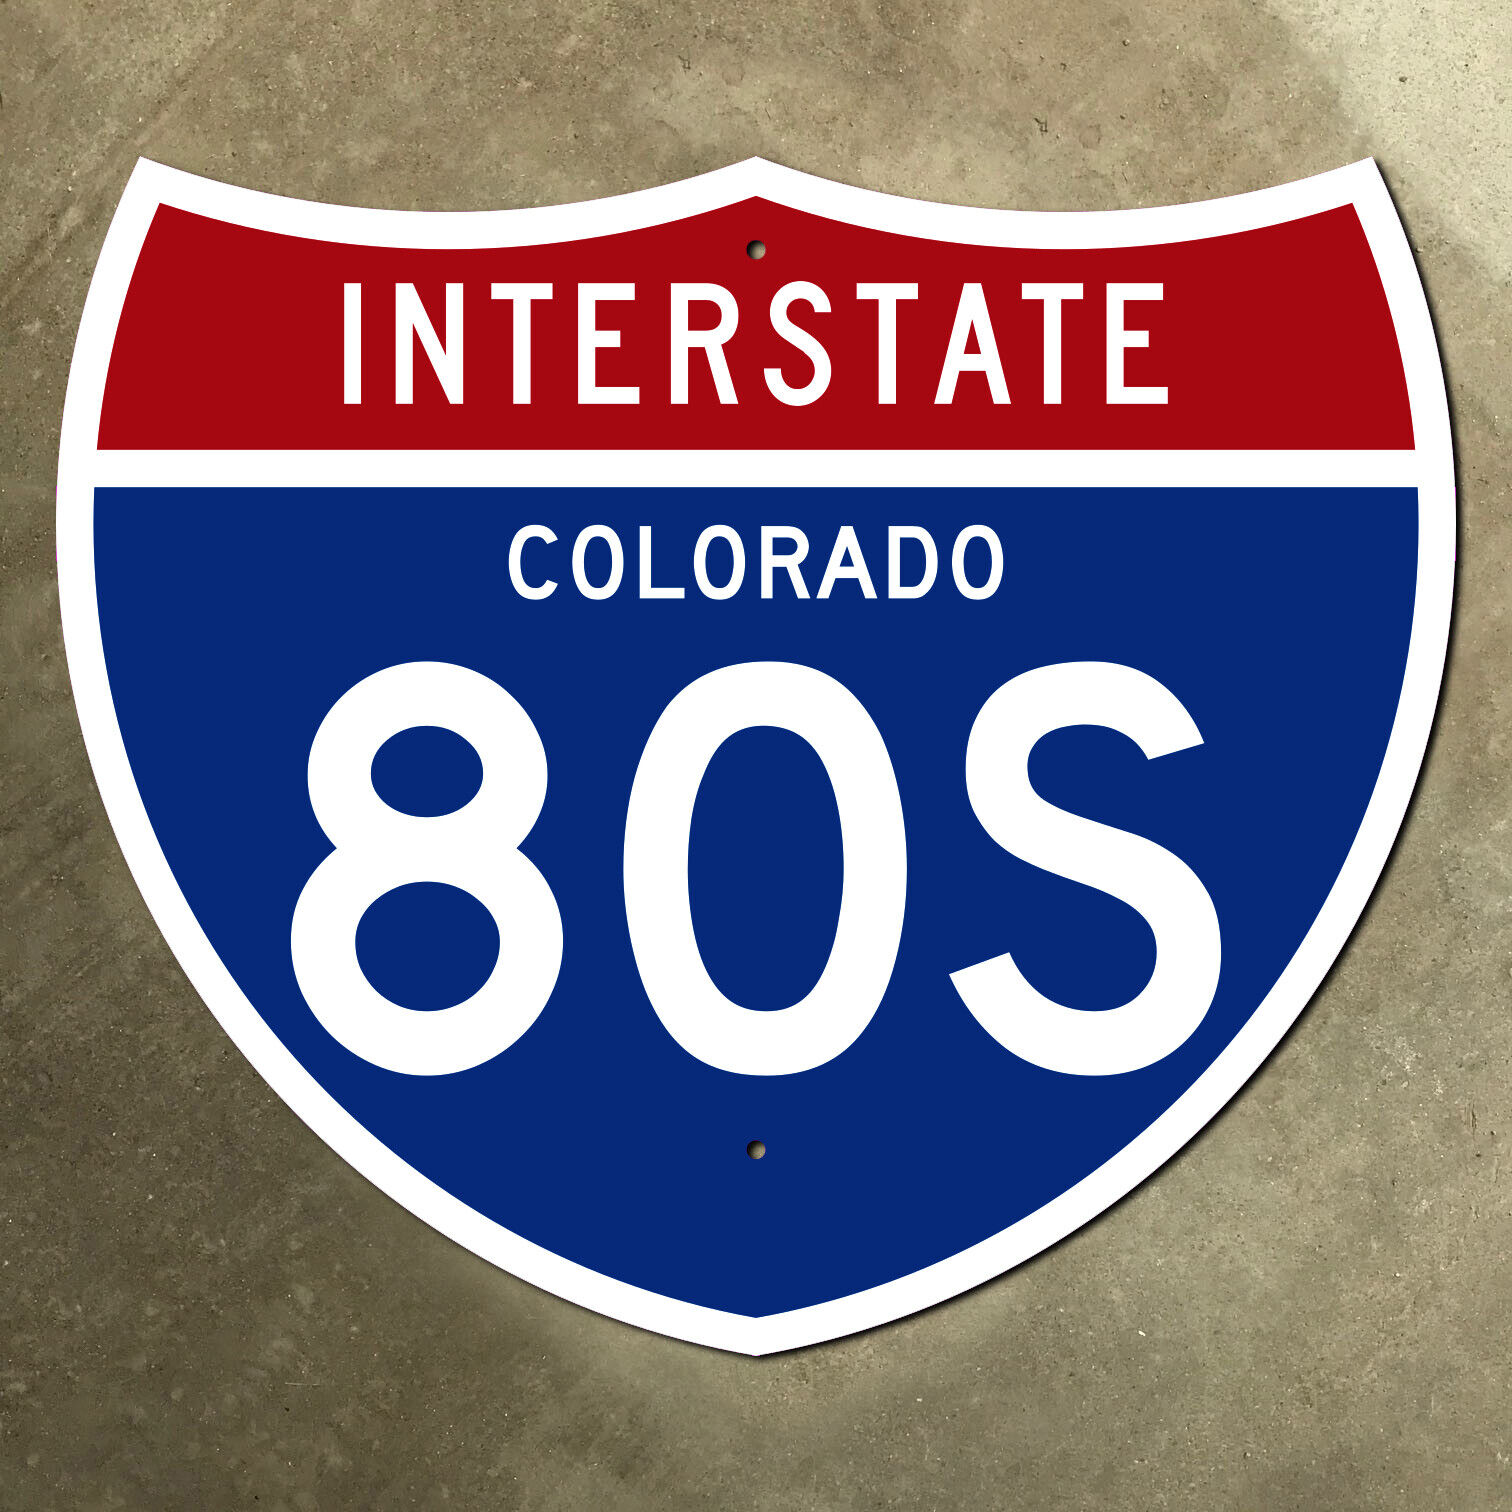 Colorado interstate route 80S highway marker road sign 21x18 Denver